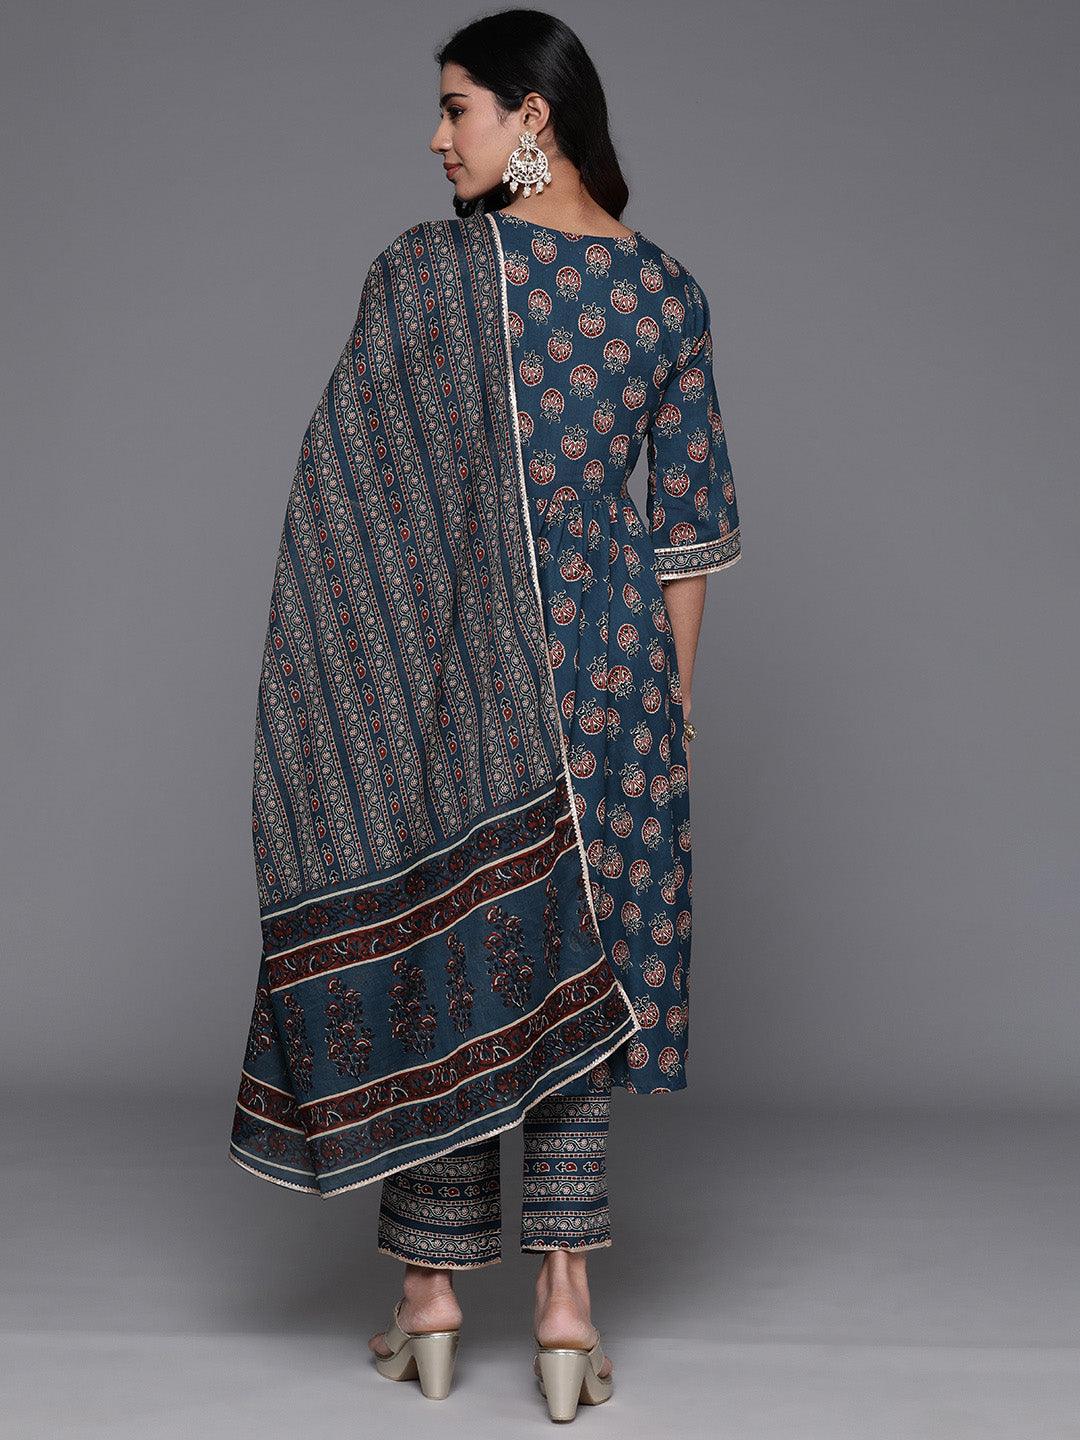 Blue Printed Cotton Anarkali Suit With Dupatta